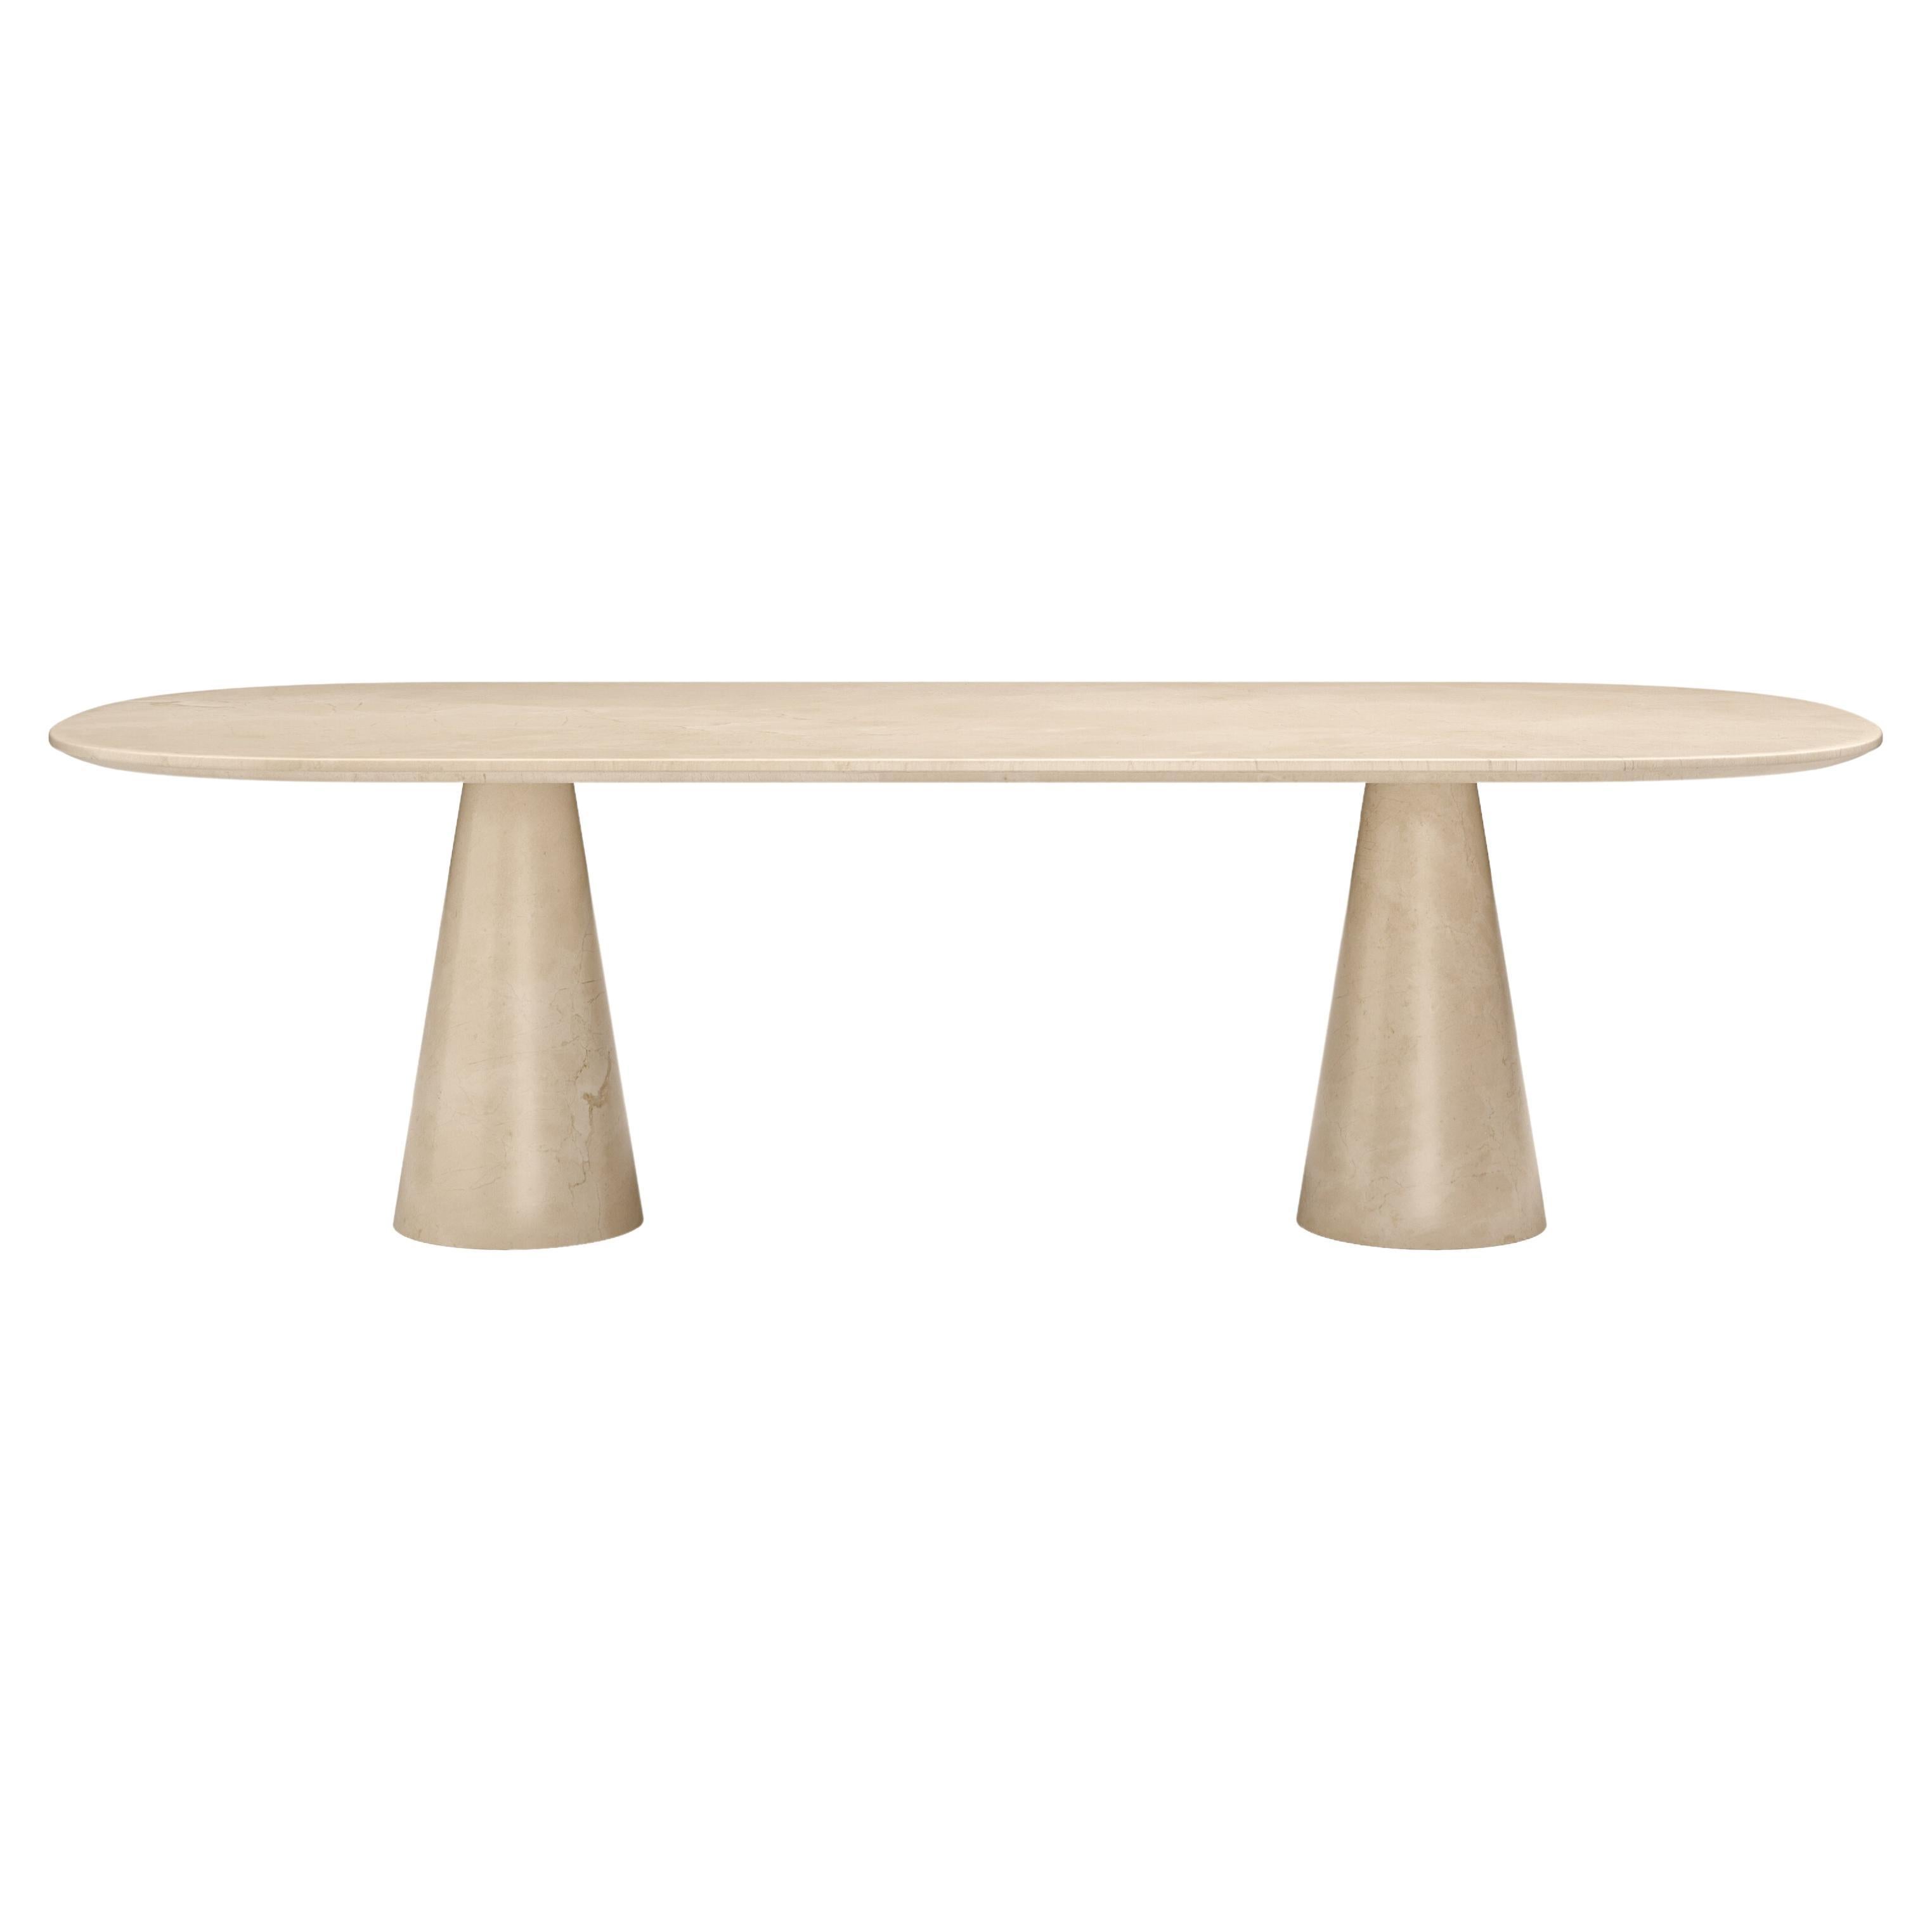 FORM(LA) Cono Oval Dining Table 108”L x 48”W x 30”H Crema Marfil Marble For Sale